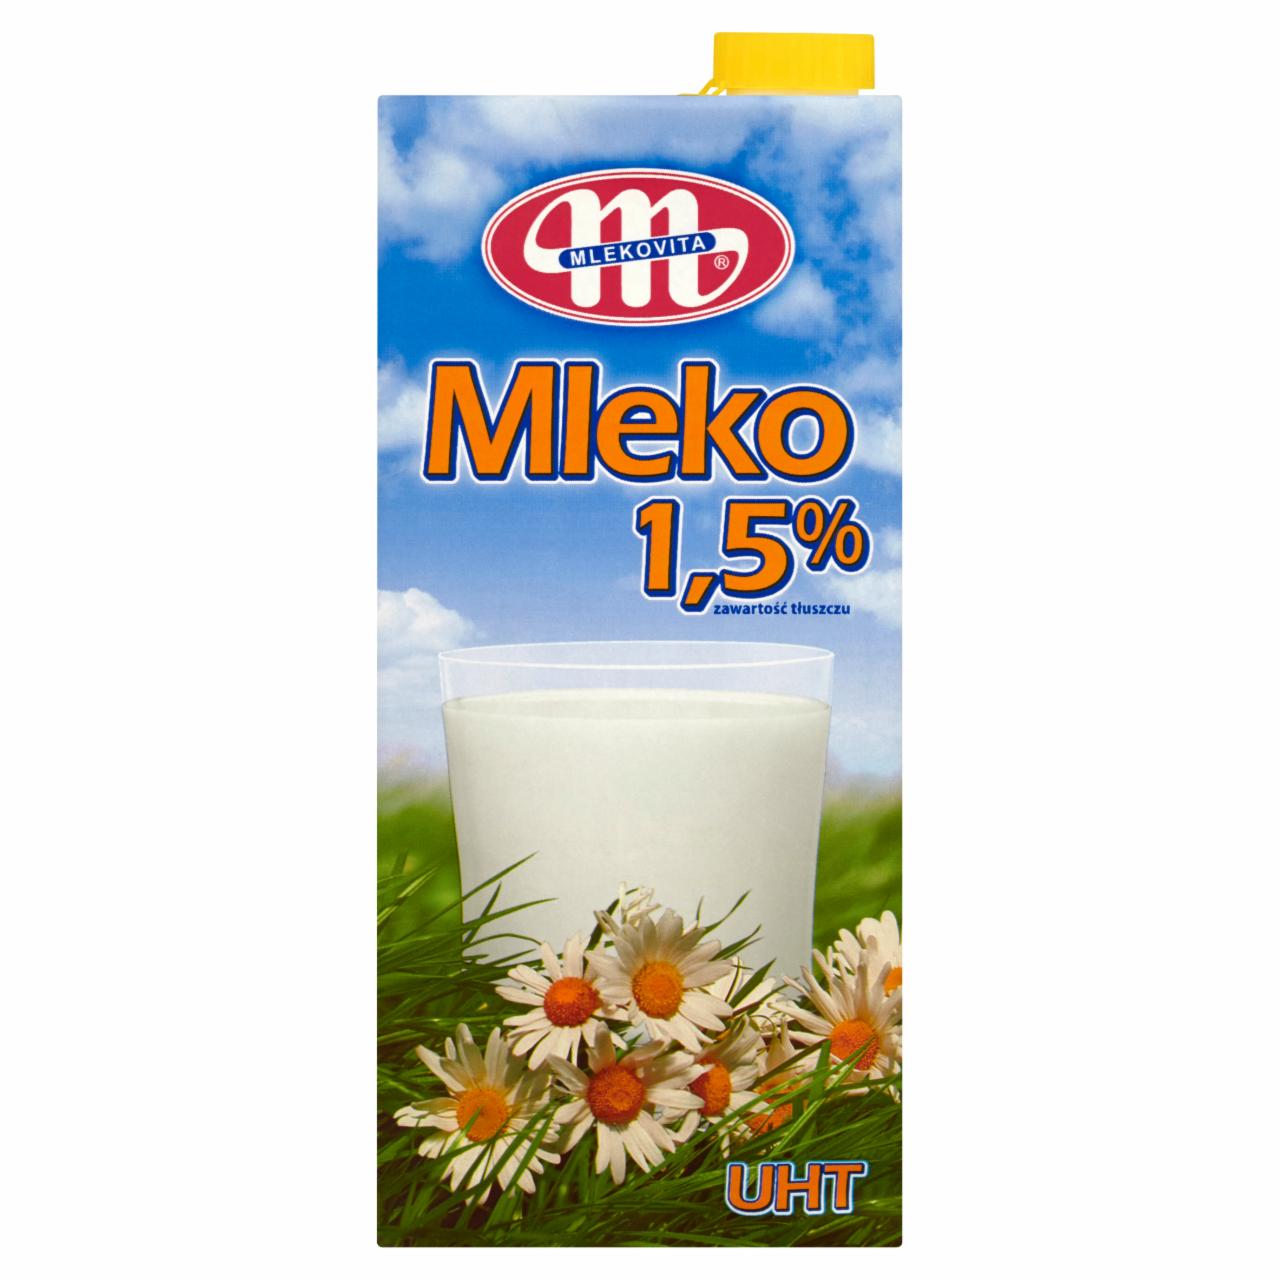 Zdjęcia - Mlekovita Mleko UHT 1,5% 1 l